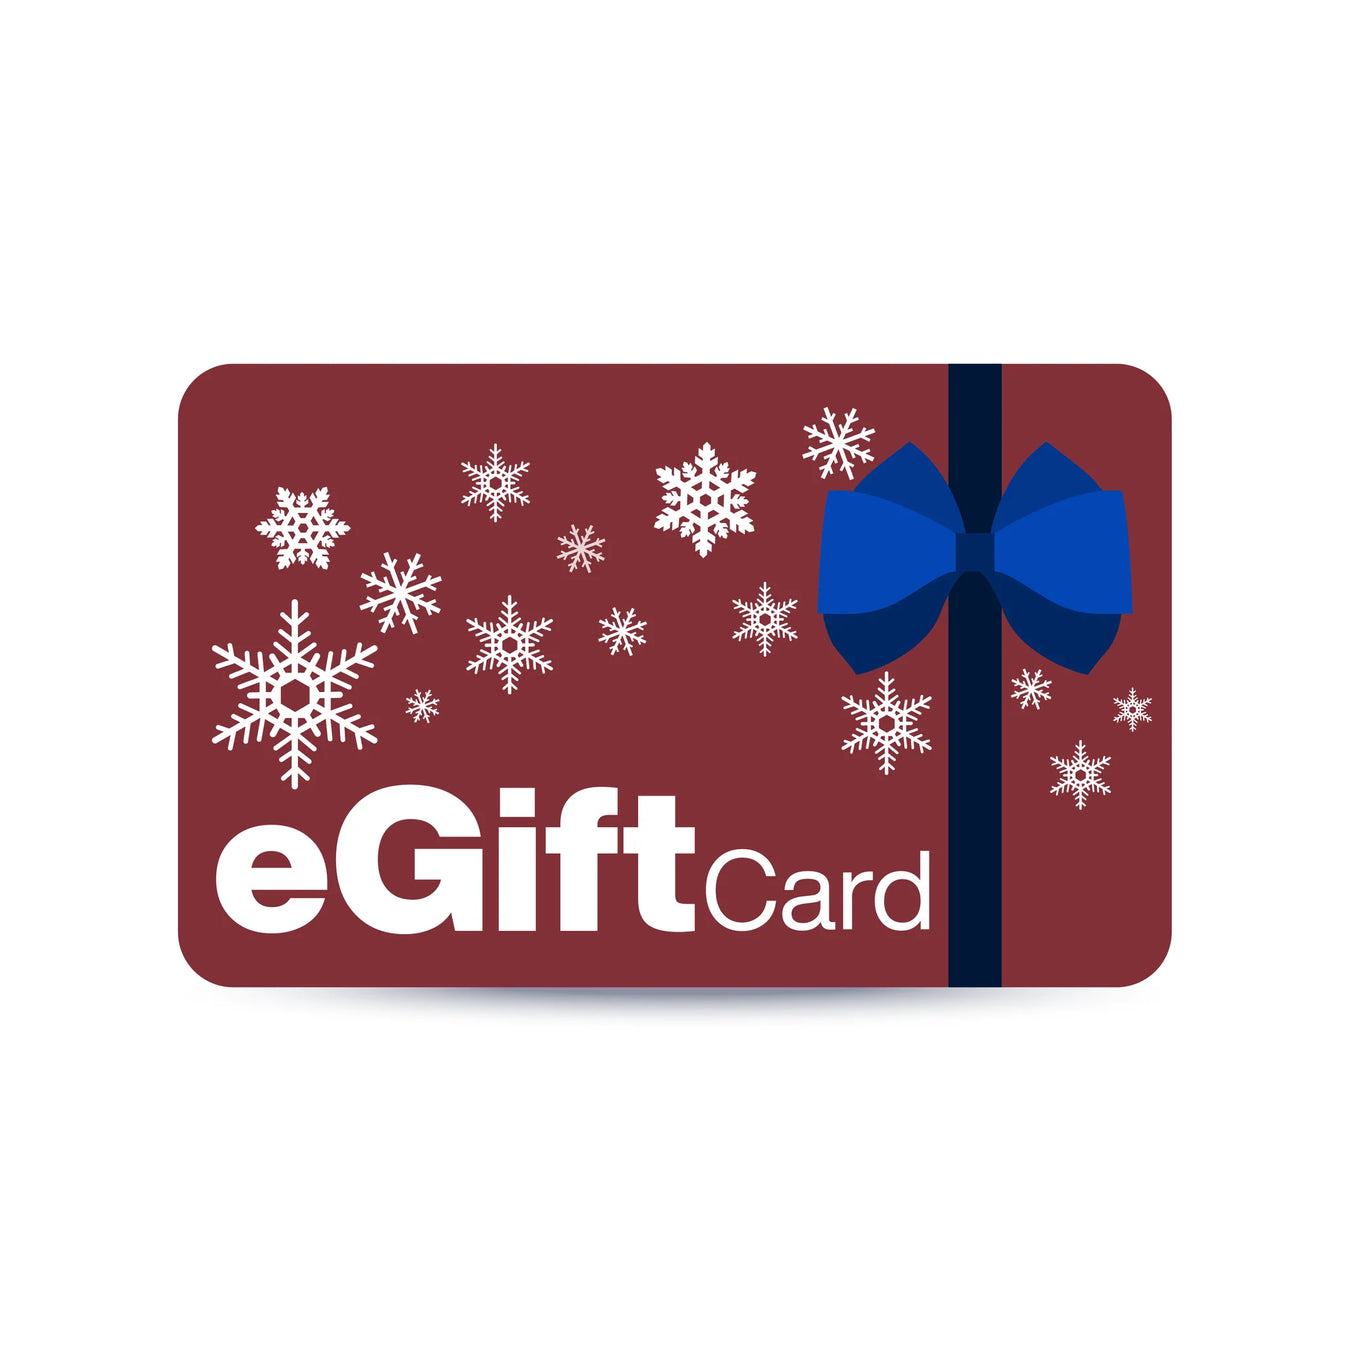 E-Gift Cards